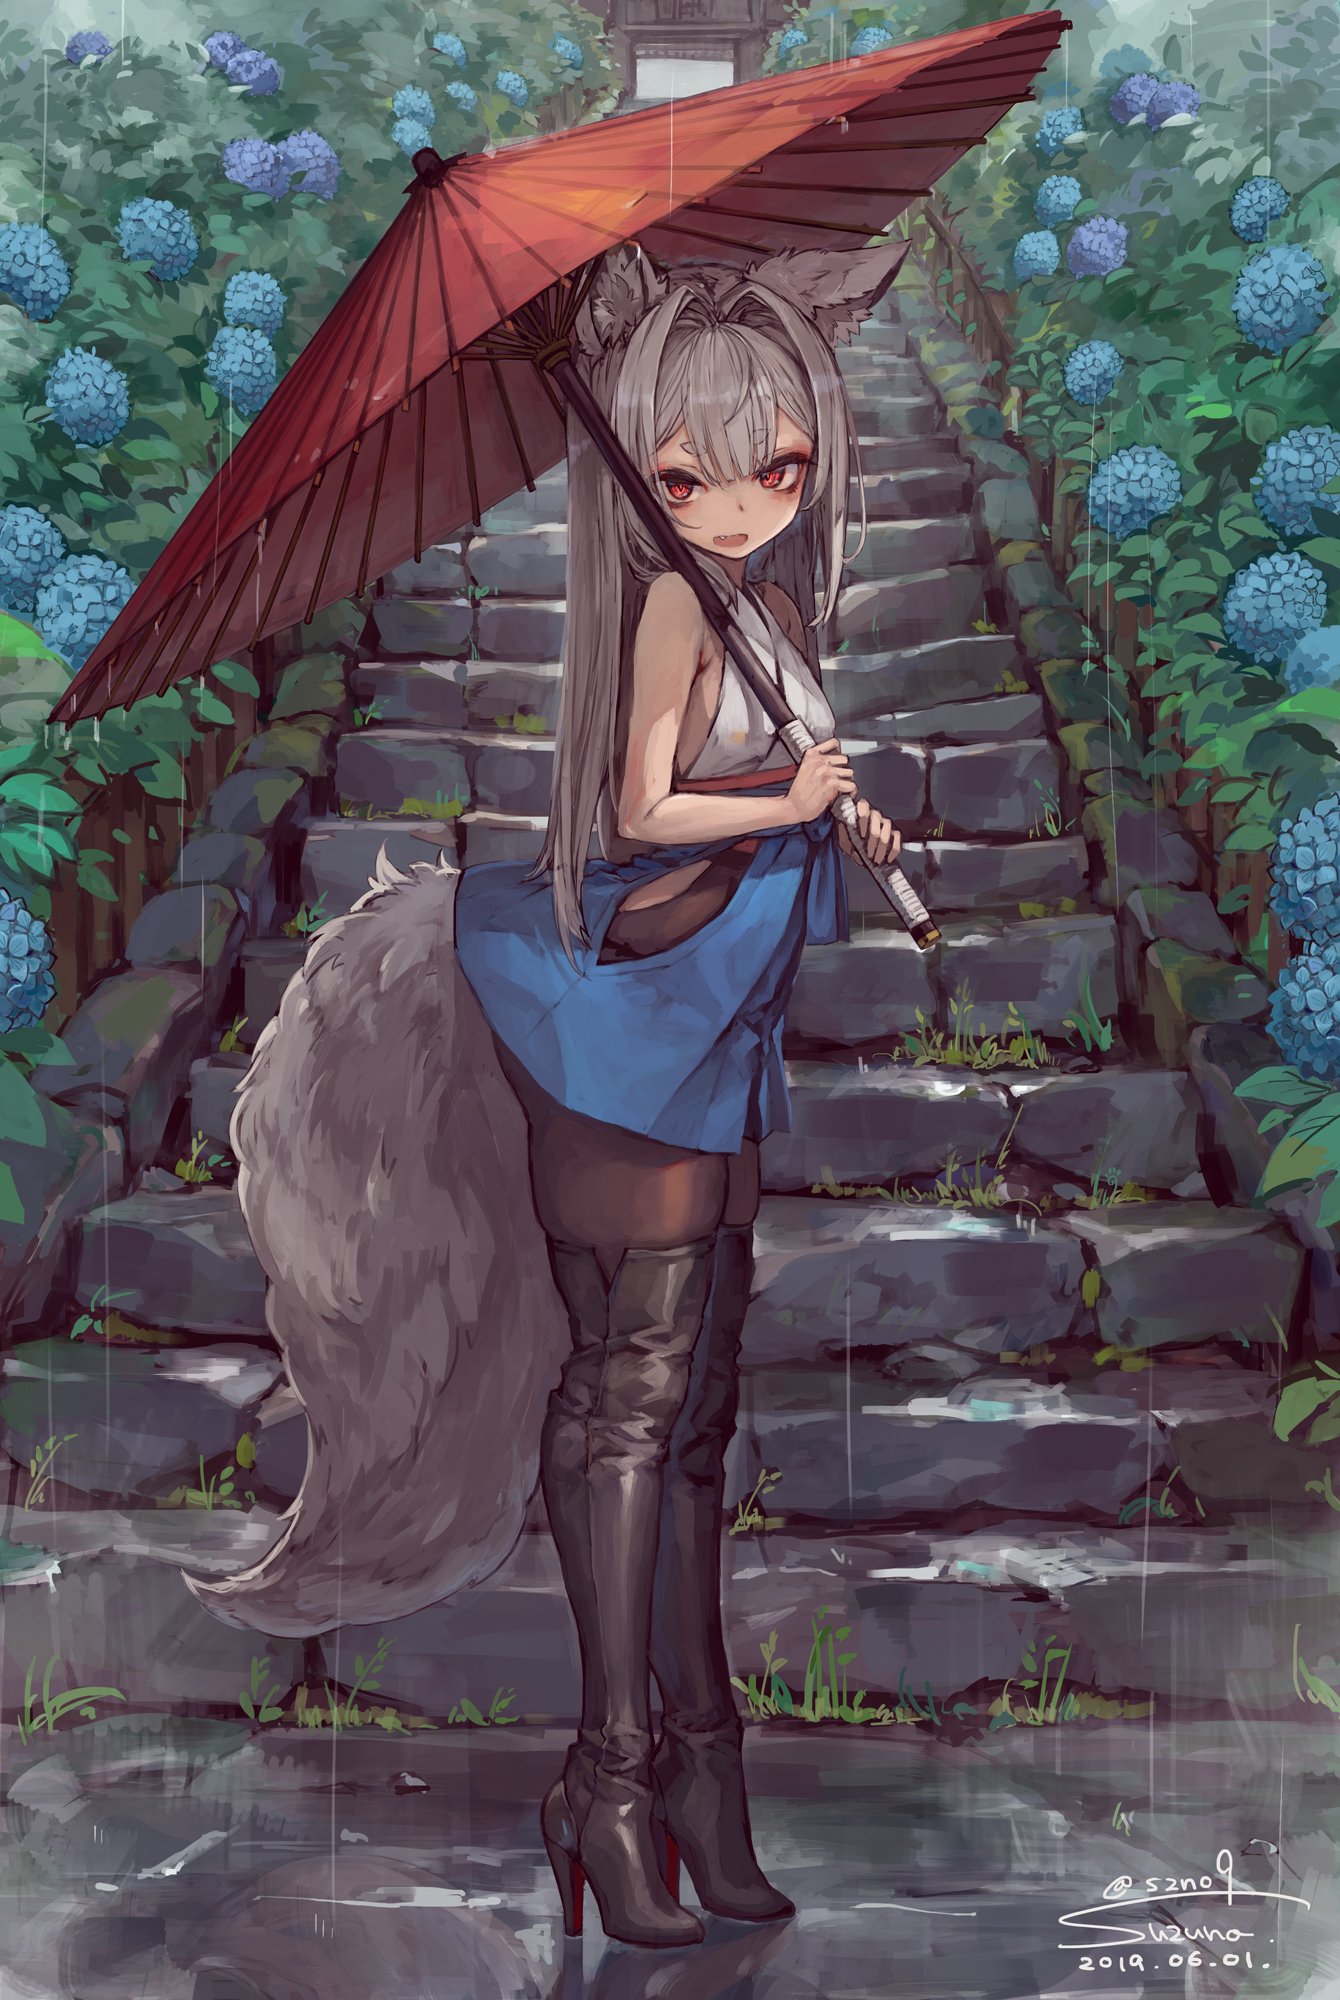 Kitsune with umbrella (fox ears and tail, OC girl): Original anime characters (Artist: Suzuno (bookshelf))